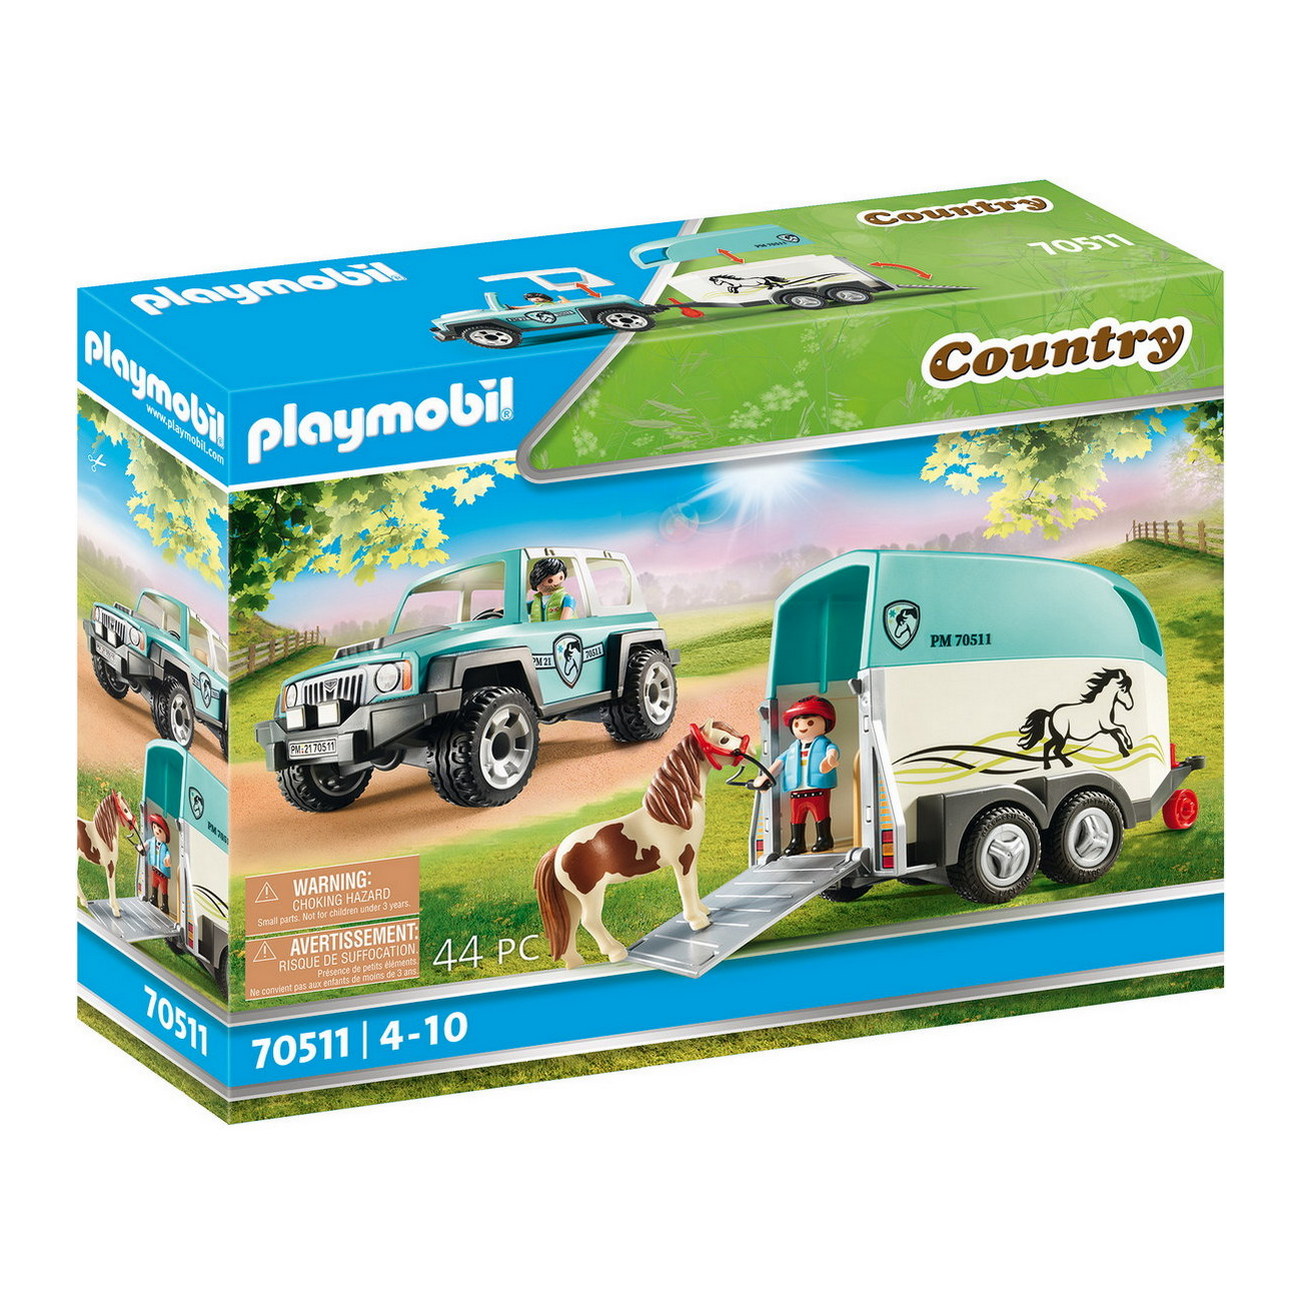 Playmobil 70511 - PKW mit Ponyanhänger (Country)